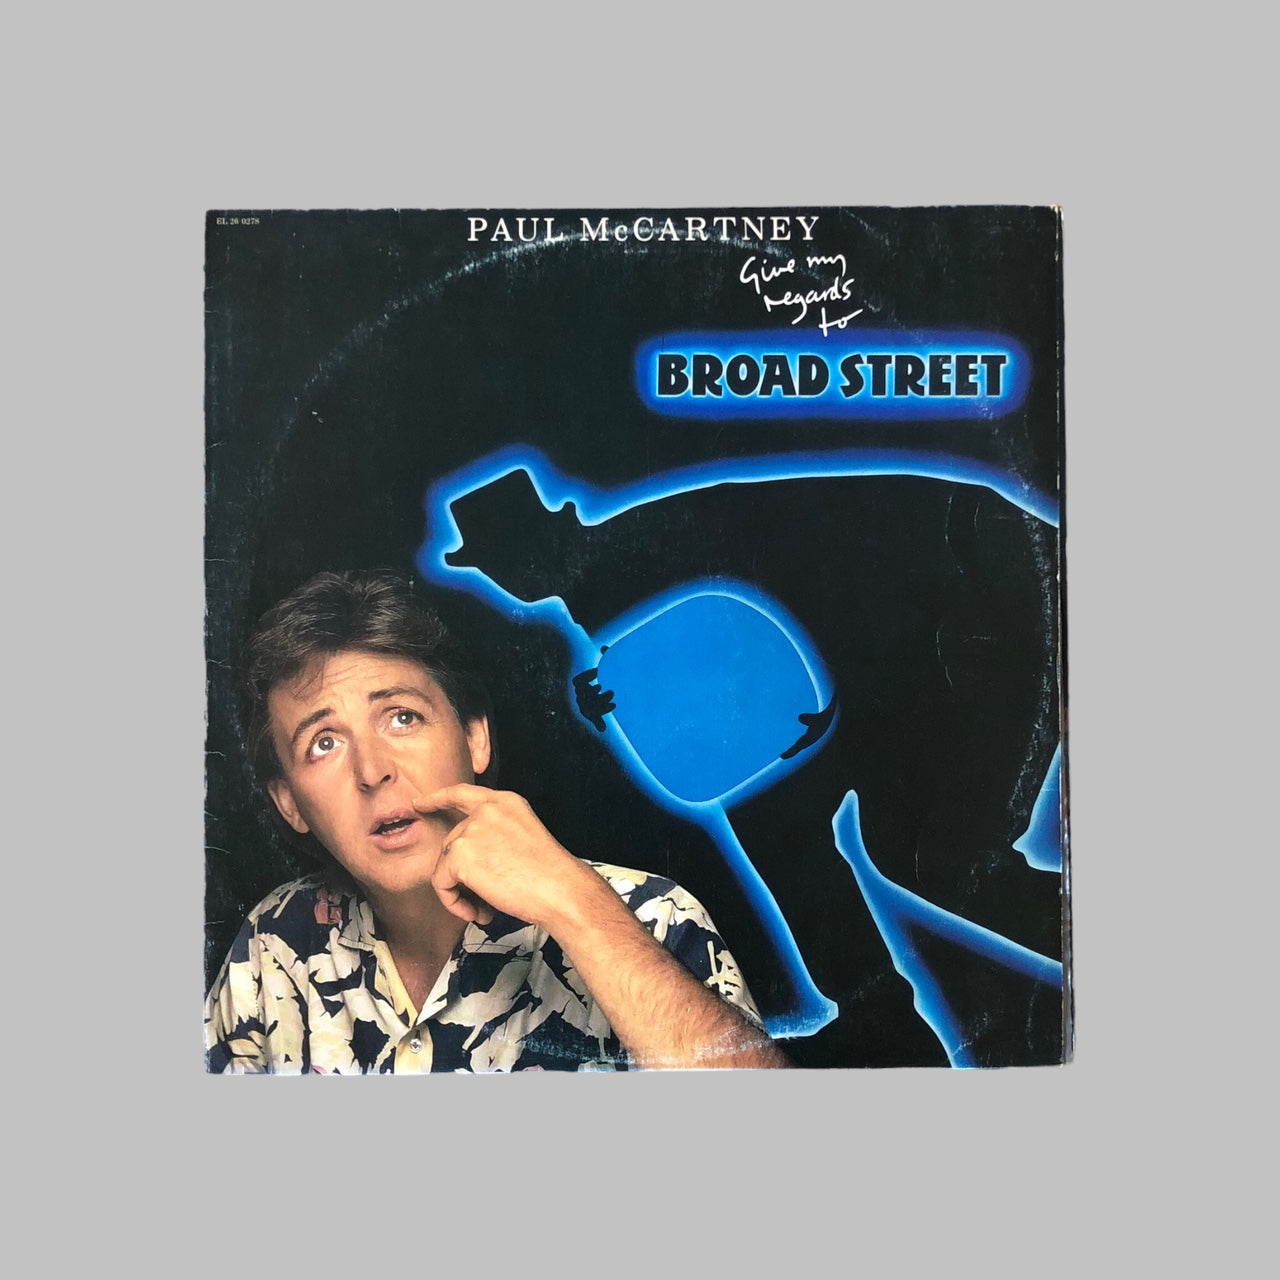 LP Vinyl - Paul McCartney  - Give My Regards to Broad Street